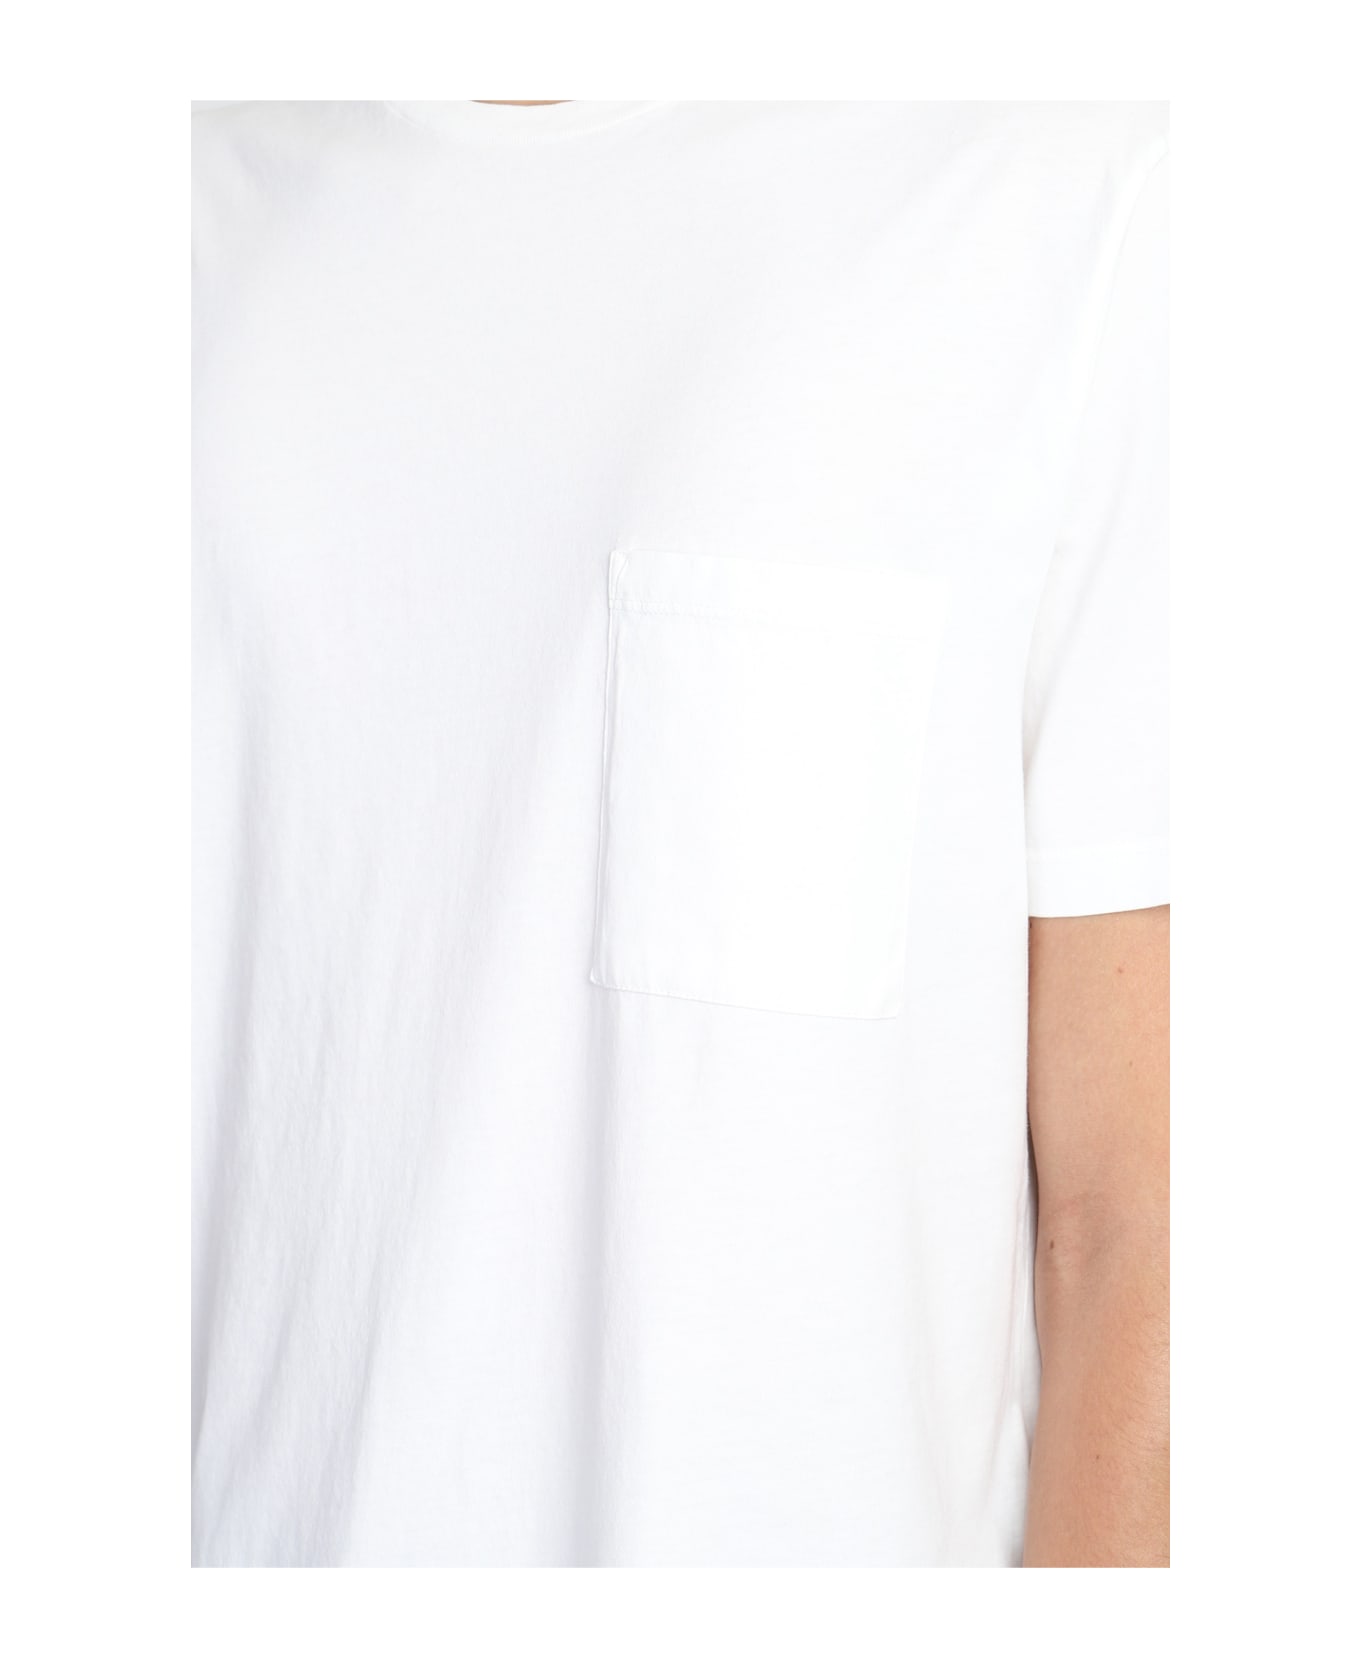 Barena New Jersey T-shirt In White Cotton - white